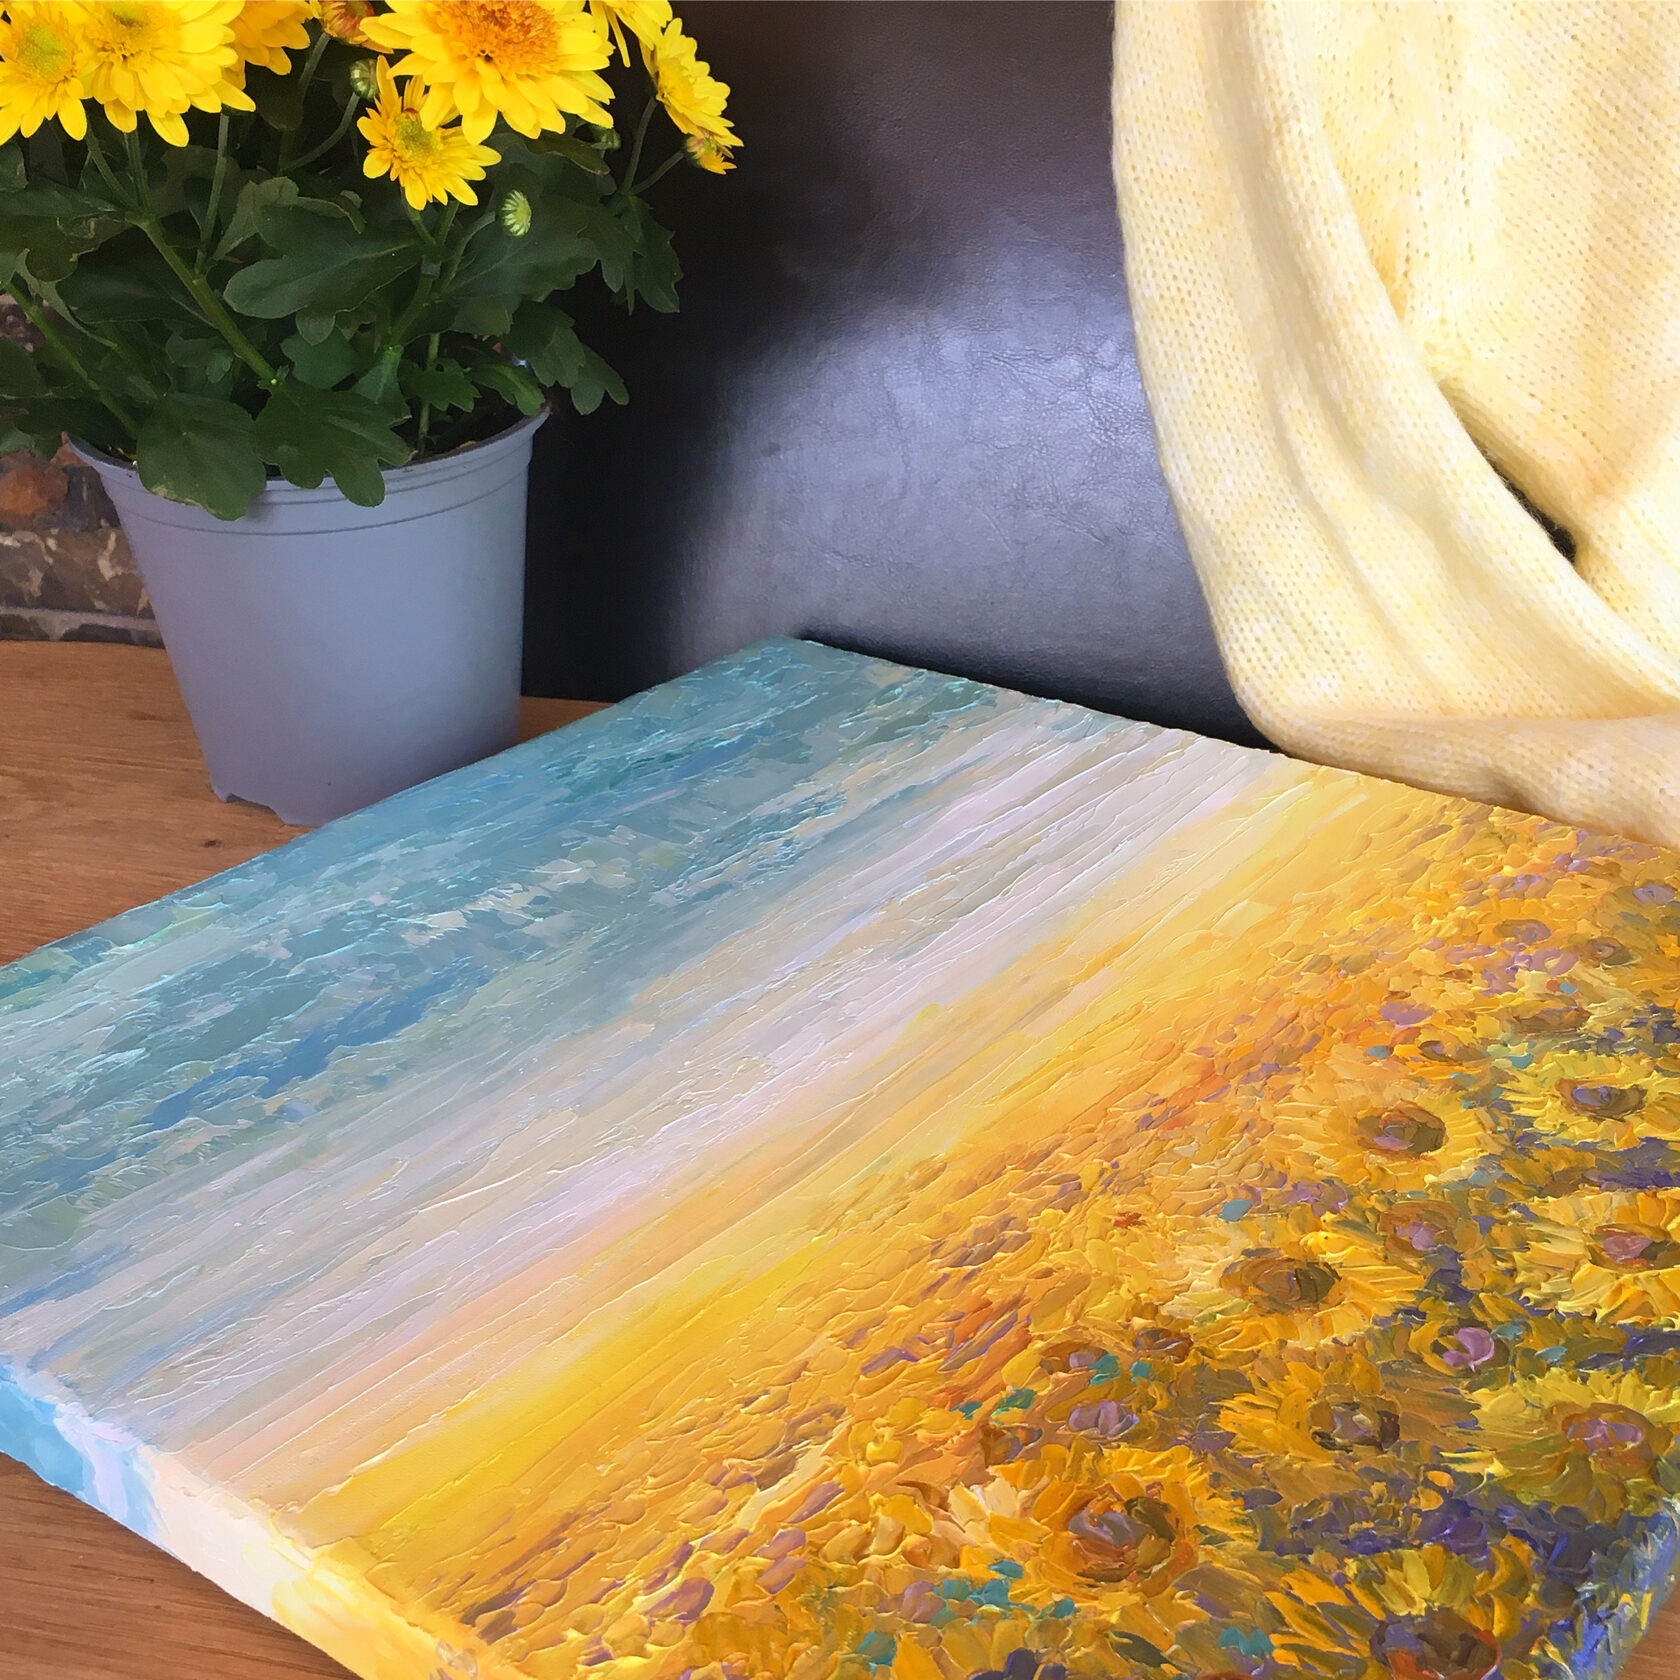 Sunflower field painting